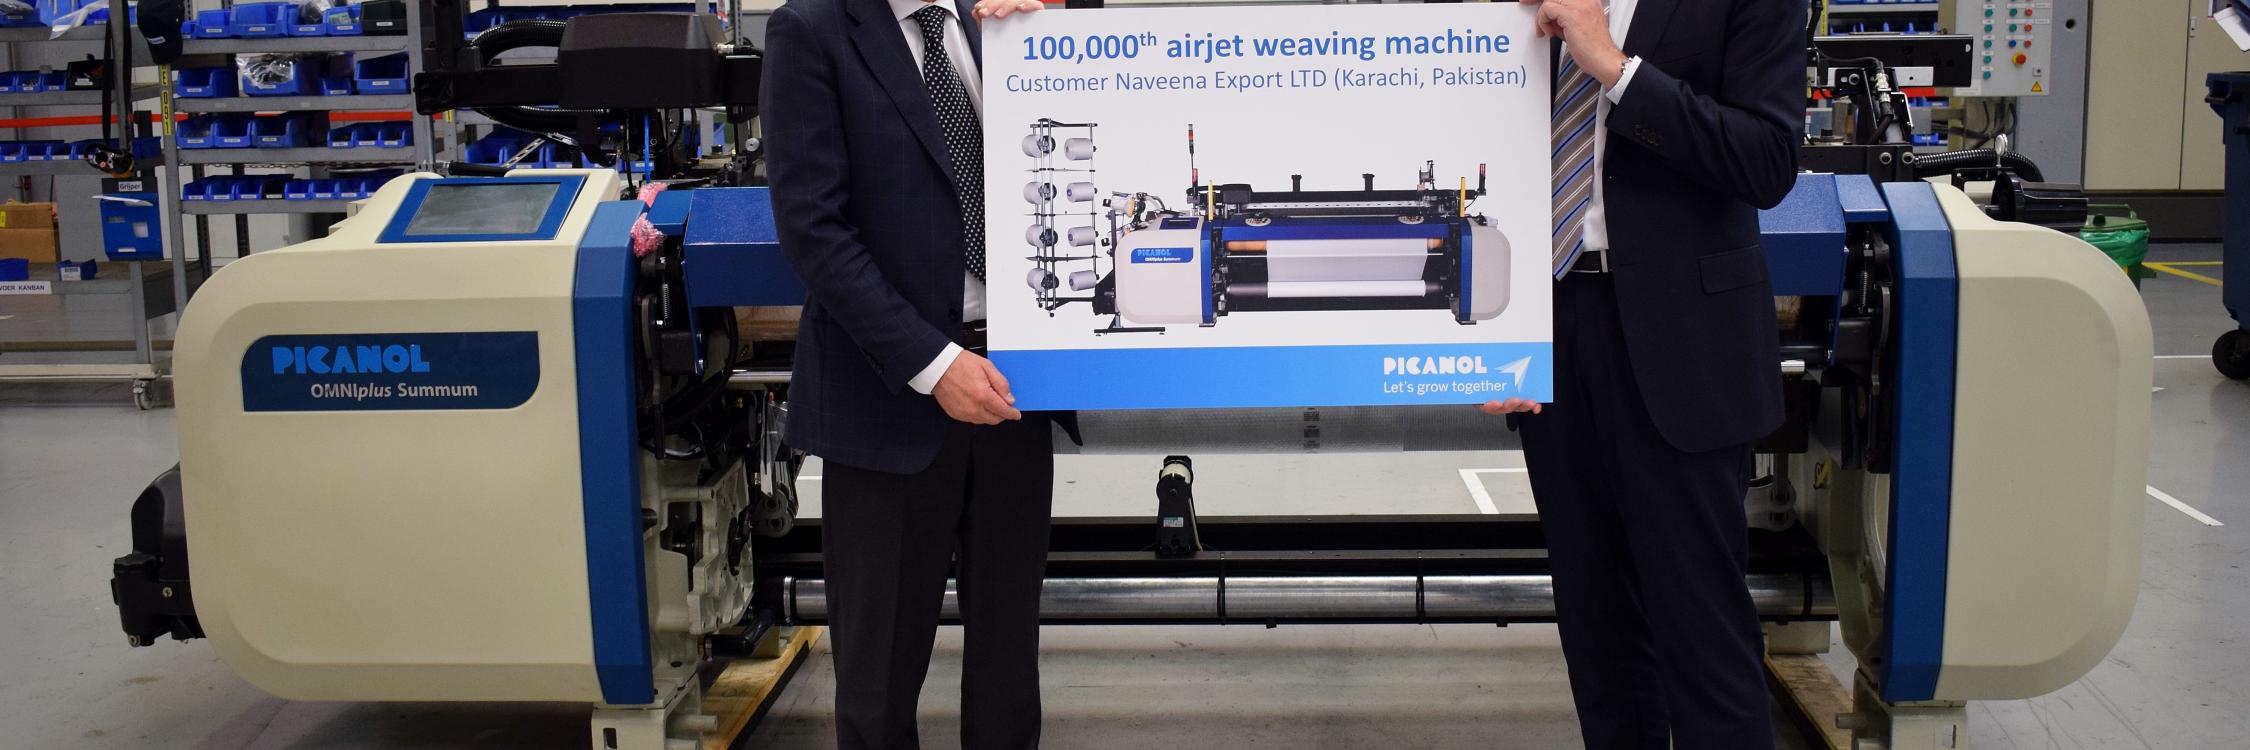 100,000th airjet weaving machine.JPG